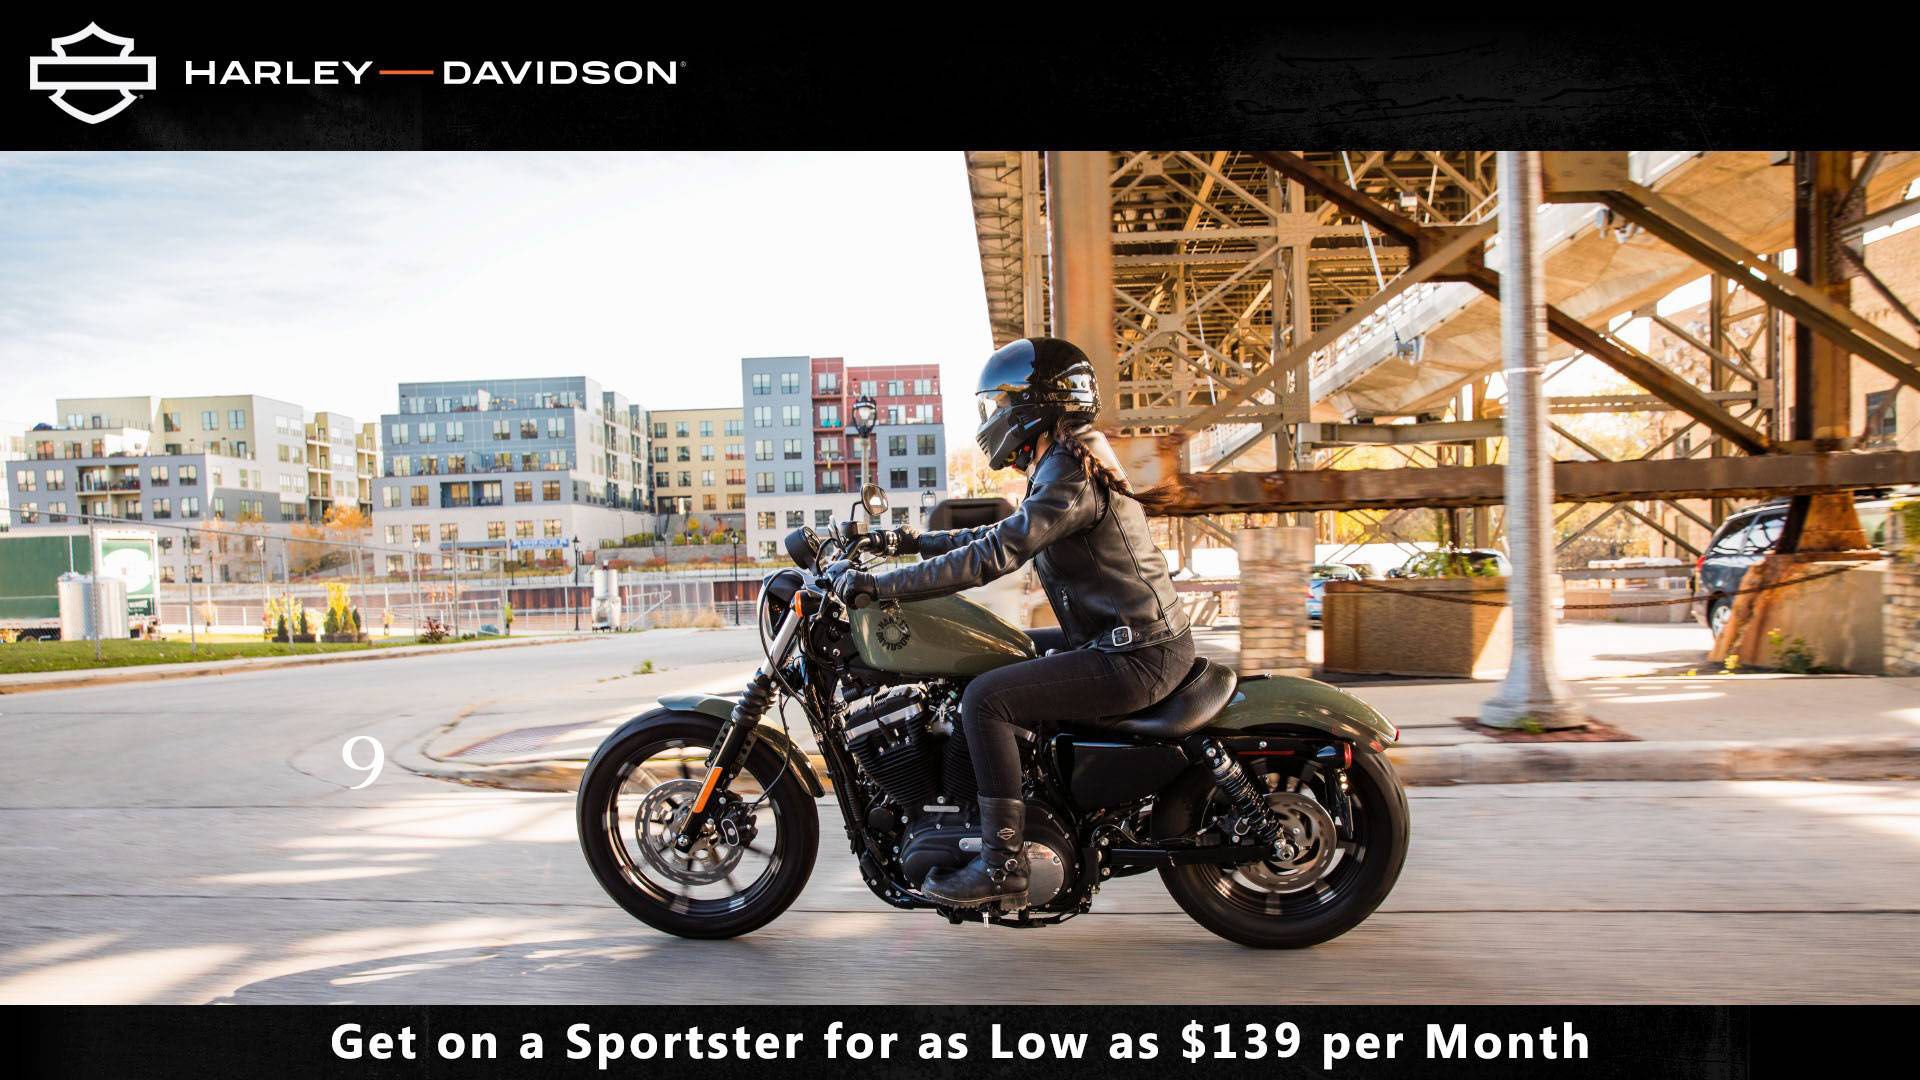 Zylstra Harley Davidson Dealers In Ames Iowa Harley Bikes Trikes